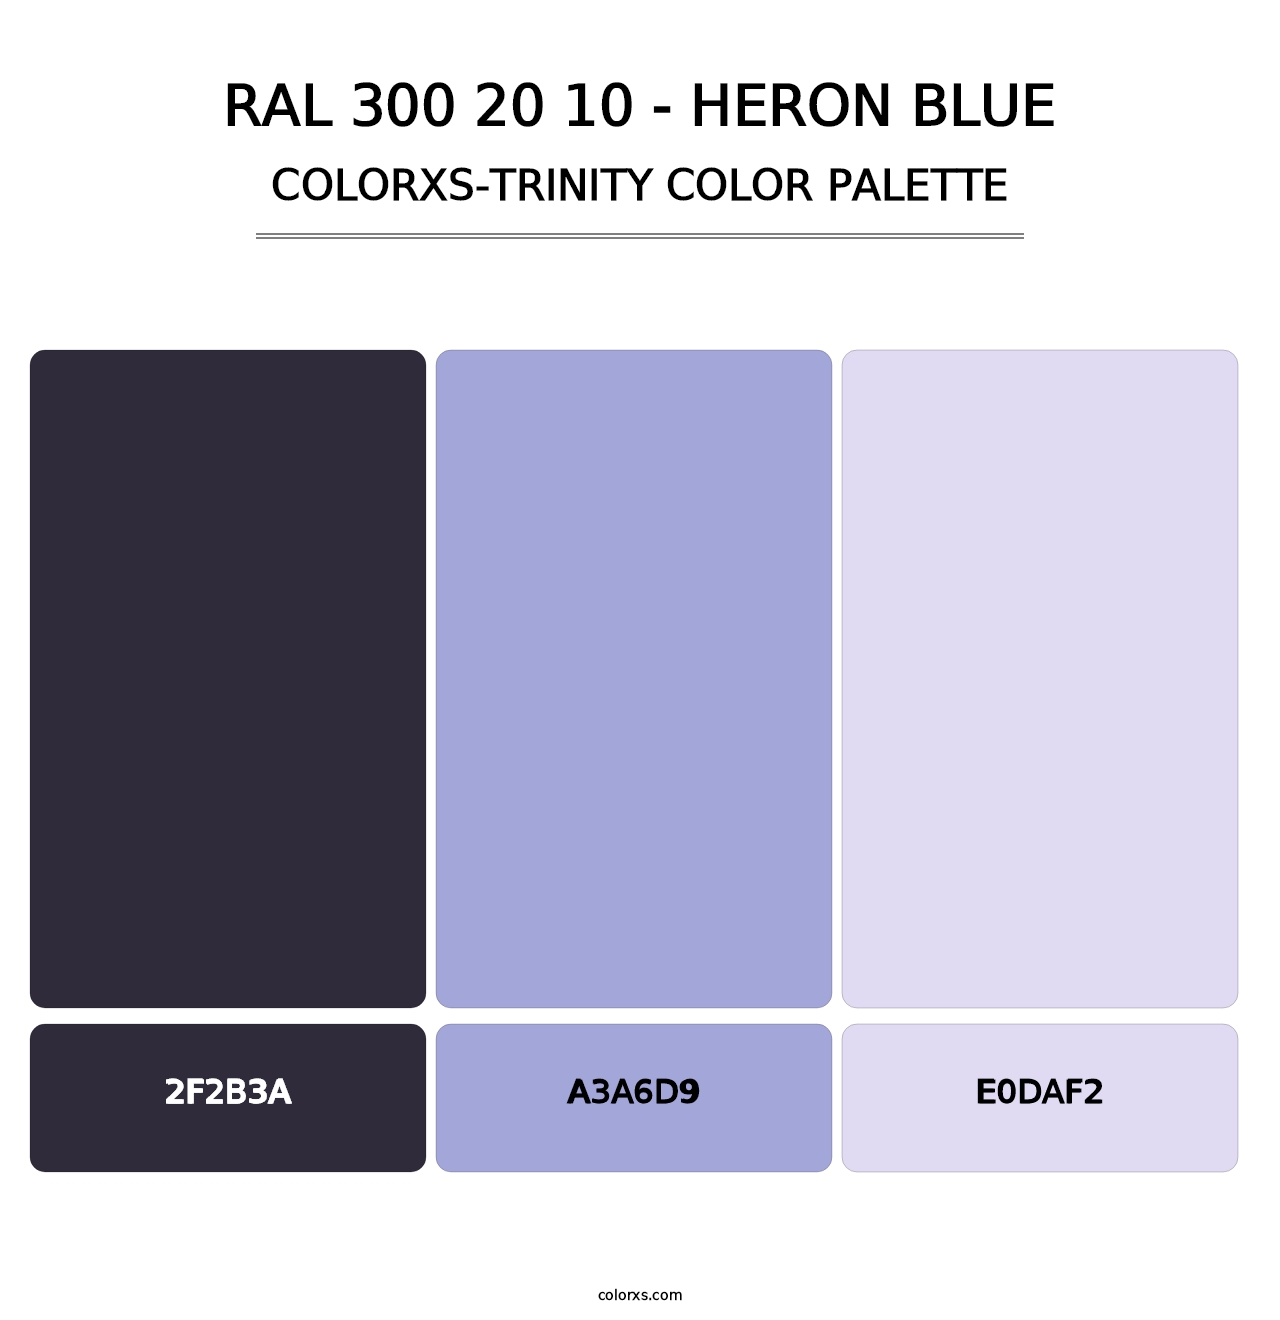 RAL 300 20 10 - Heron Blue - Colorxs Trinity Palette